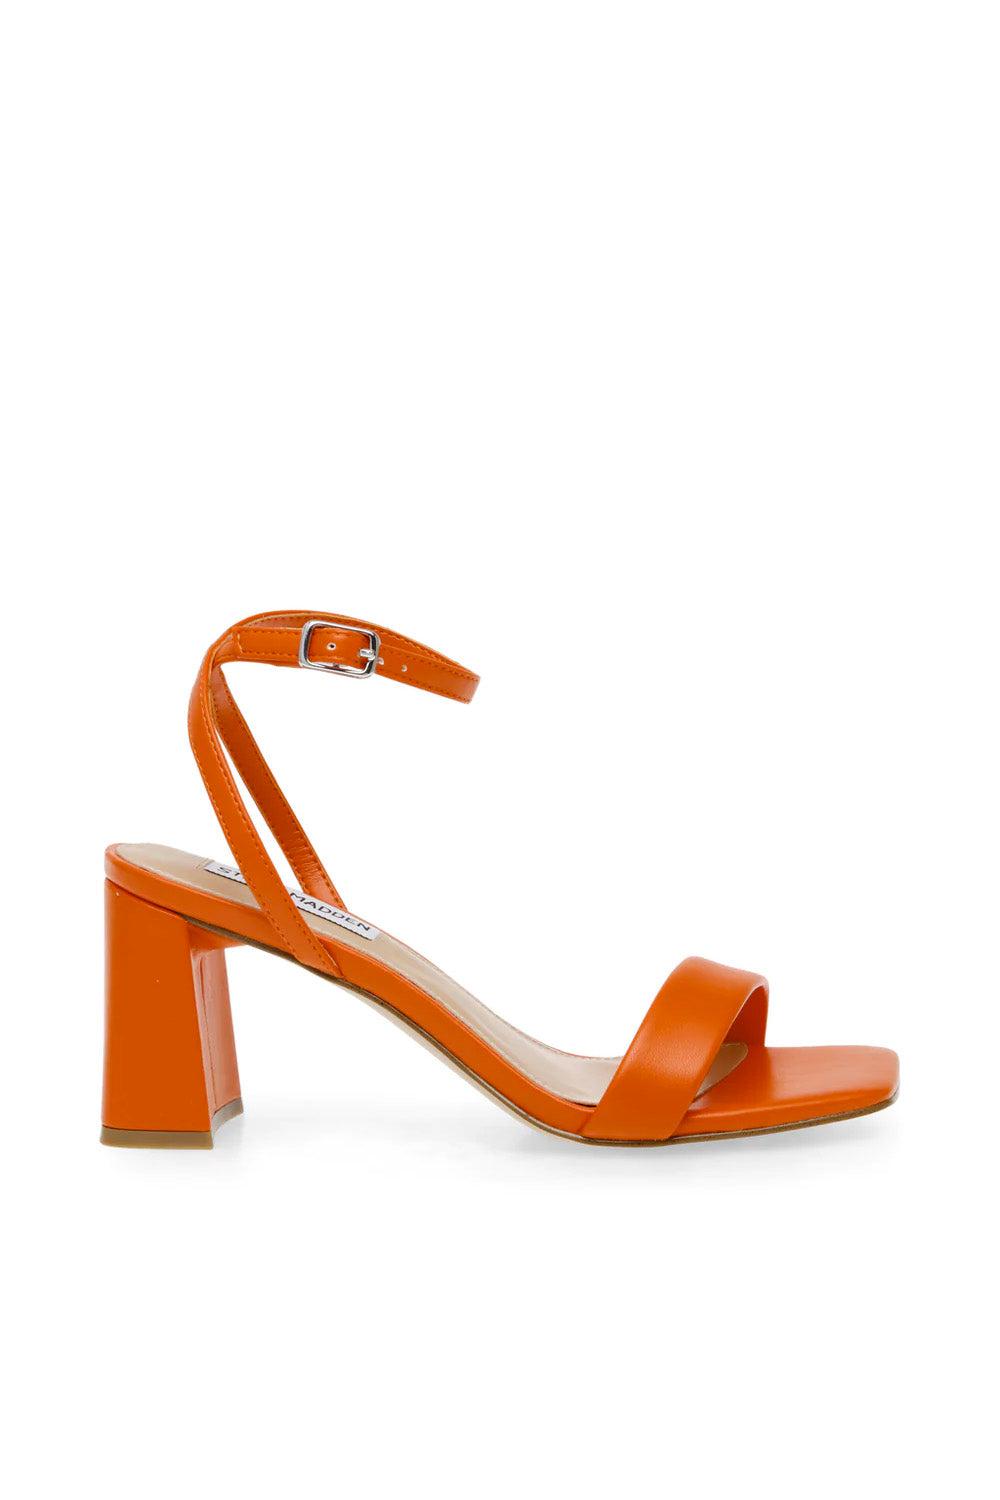 Luxe-Sandal-Synthetic-Orange